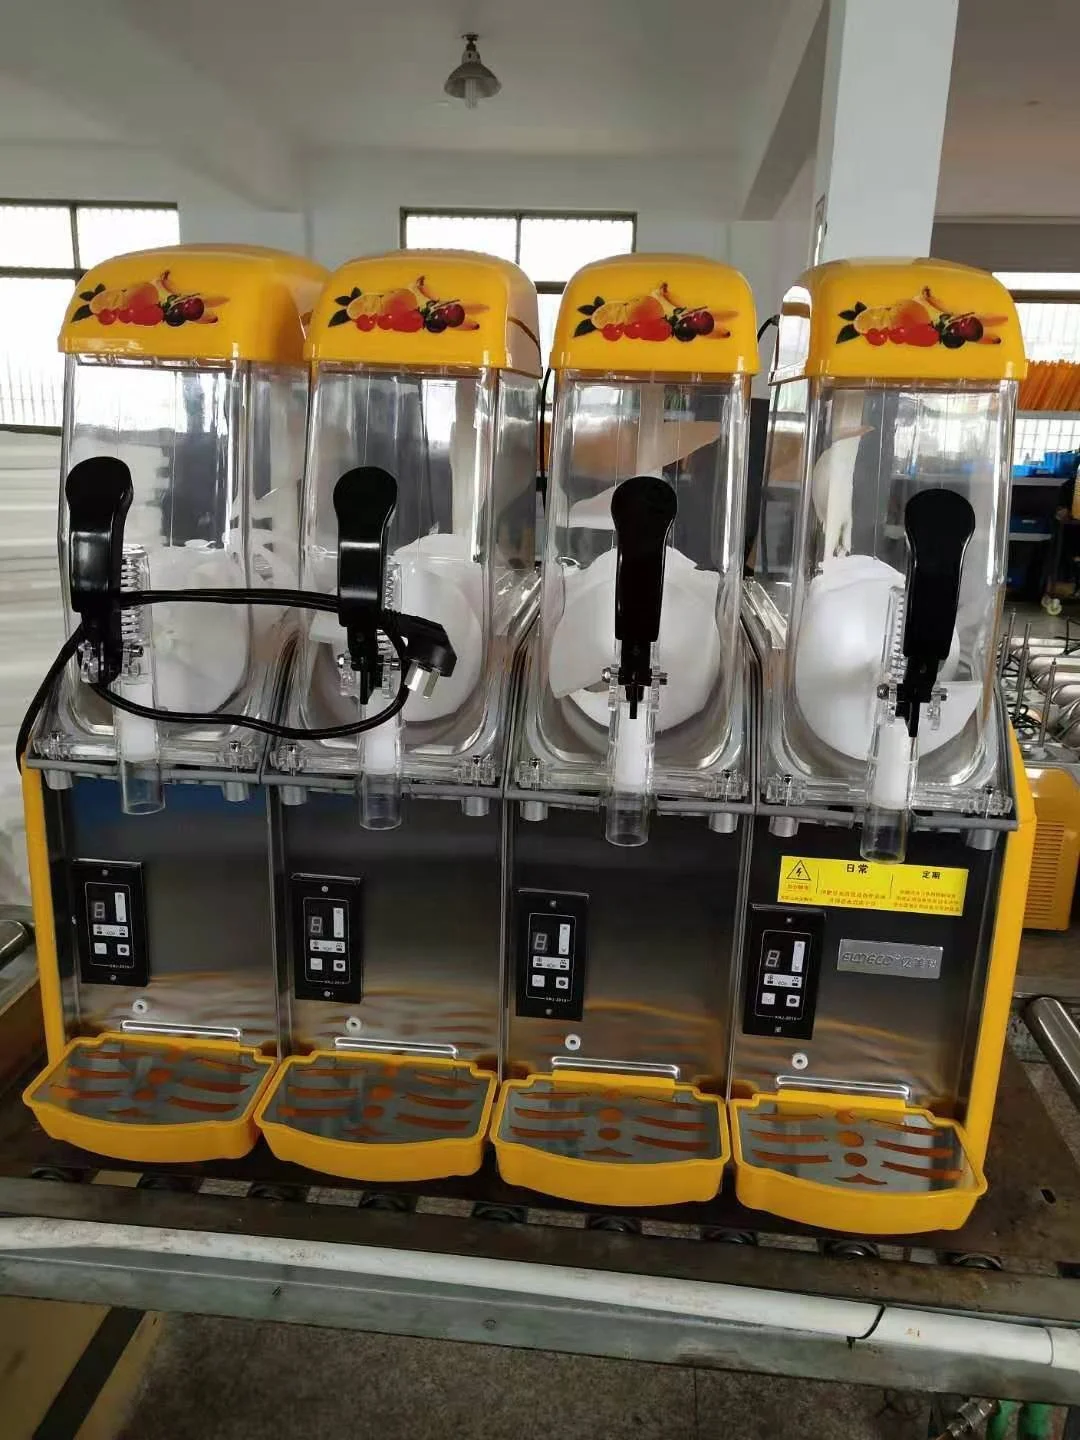 Factory price commercial Slush Ice Machine / Frozen Slush Machine / Slush Vending Machine